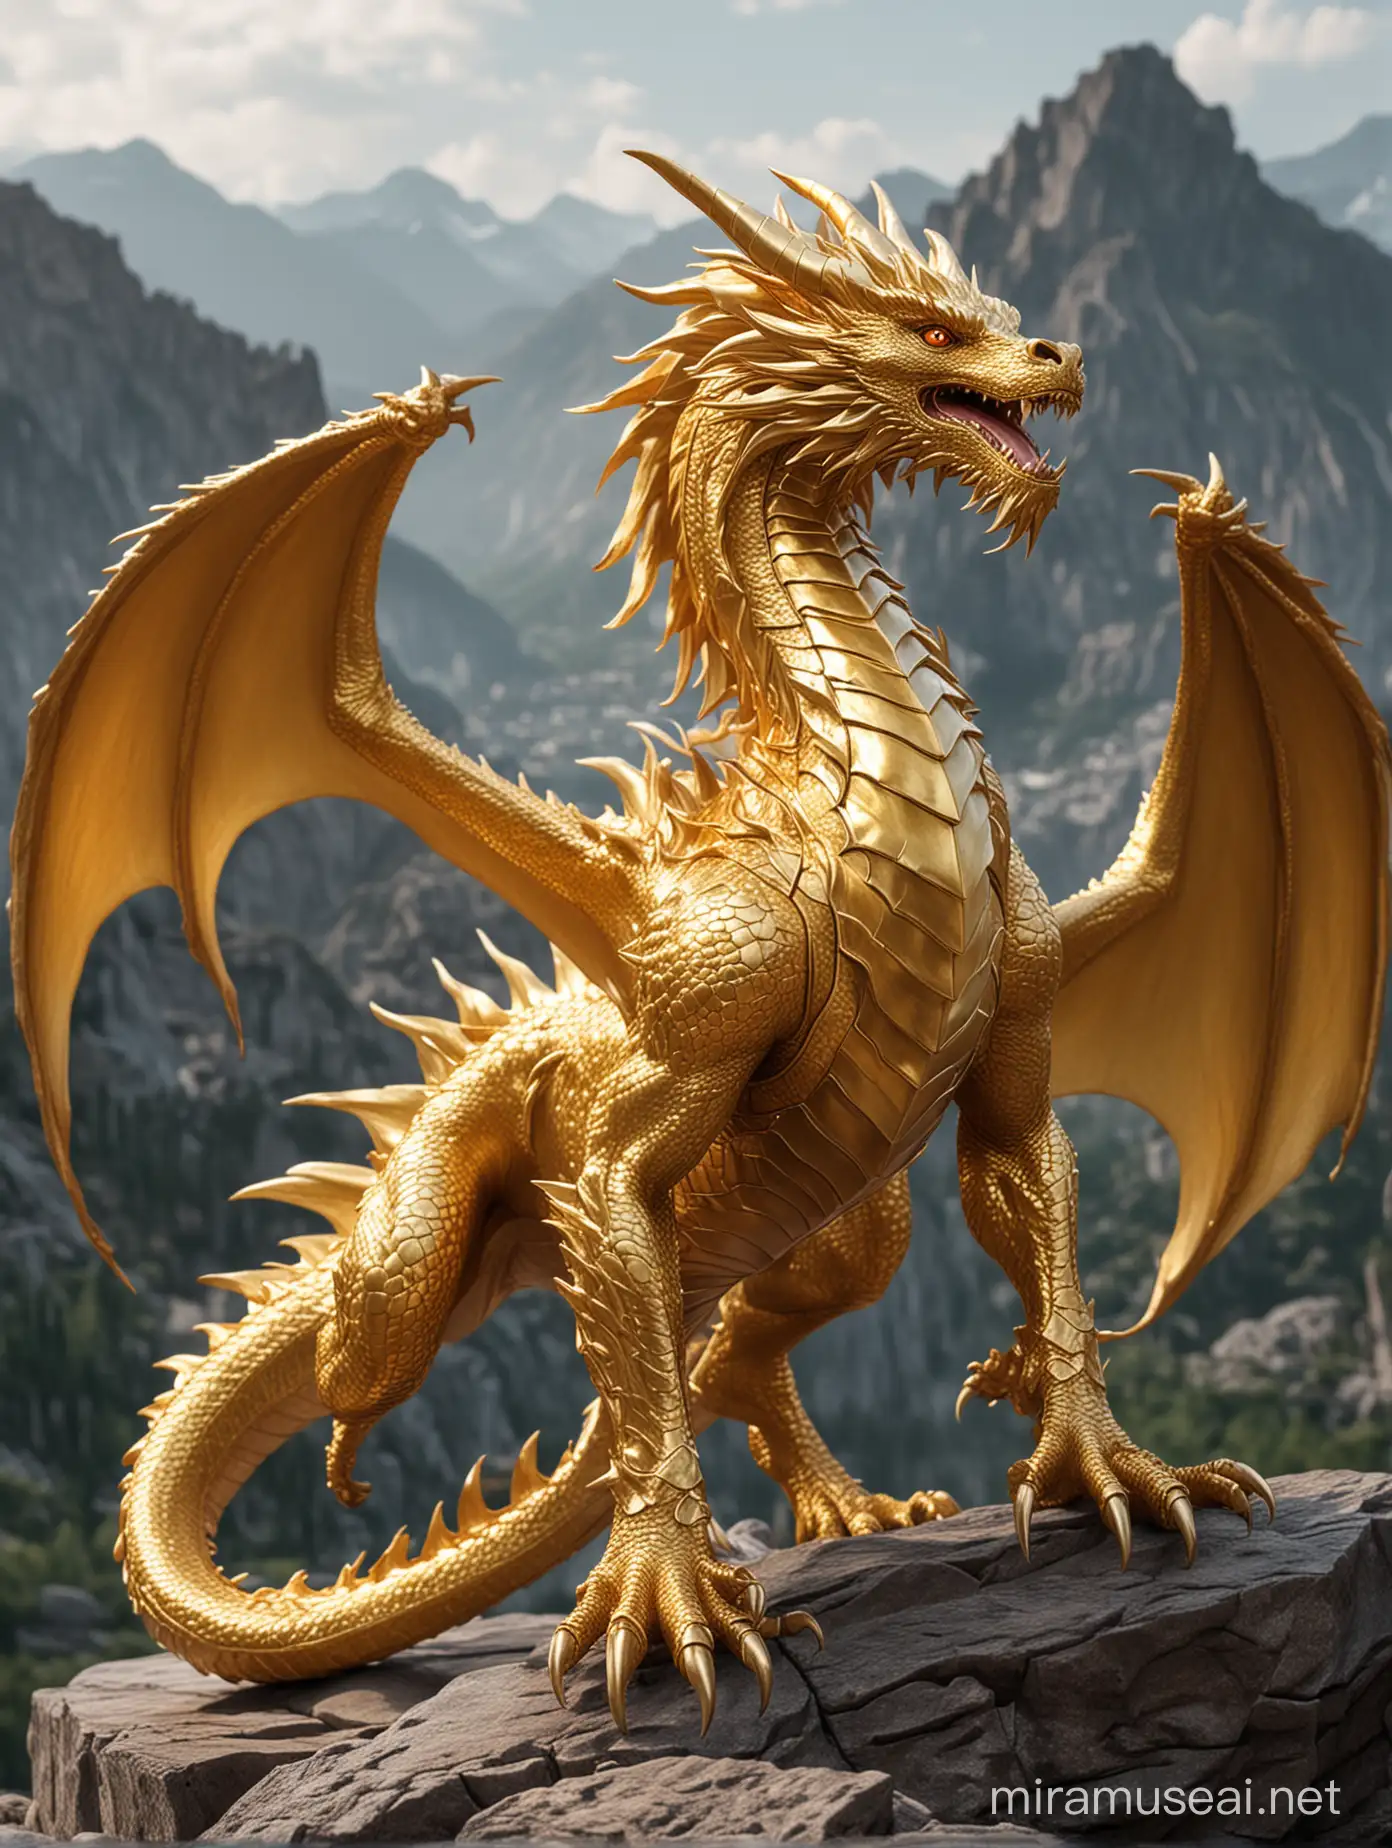 Majestic Gold Dragon Soaring Across Mountain Peaks